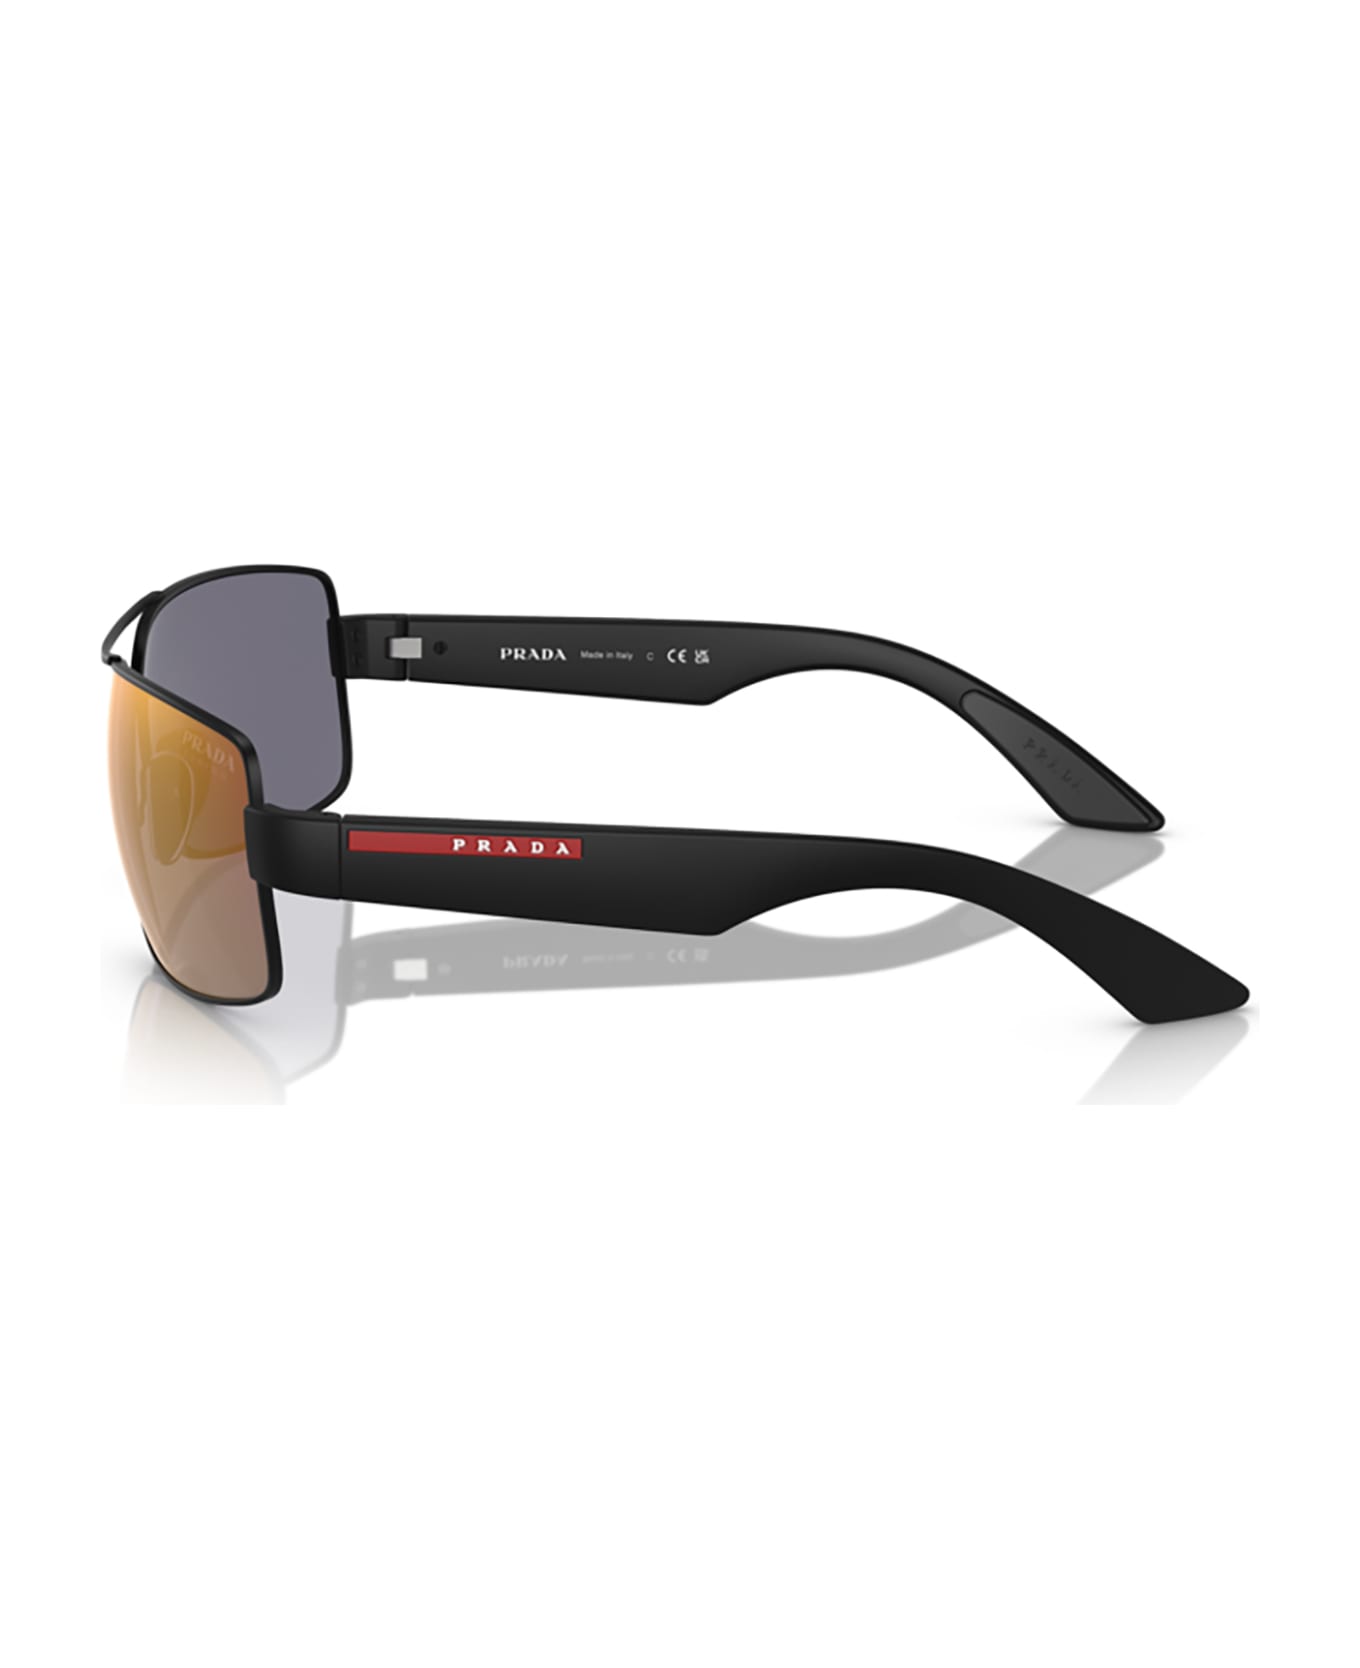 Prada Linea Rossa Ps 50zs Matte Black Sunglasses - Matte Black